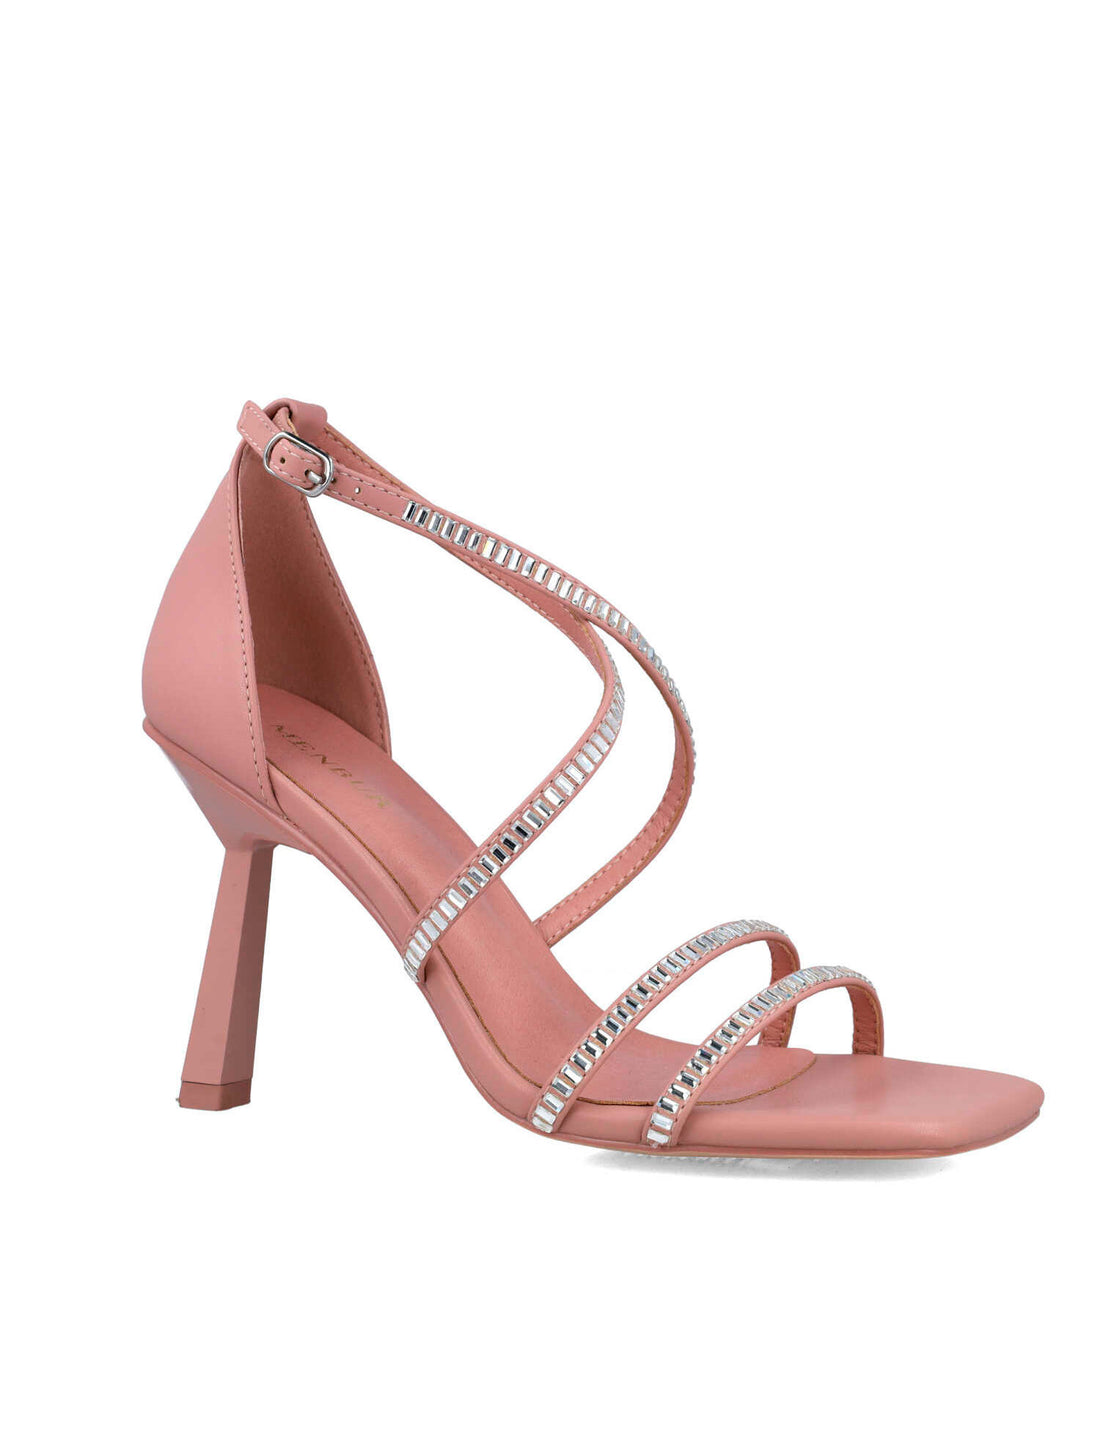 Pink High-Heel Sandals With Embellished Straps_24775_97_02